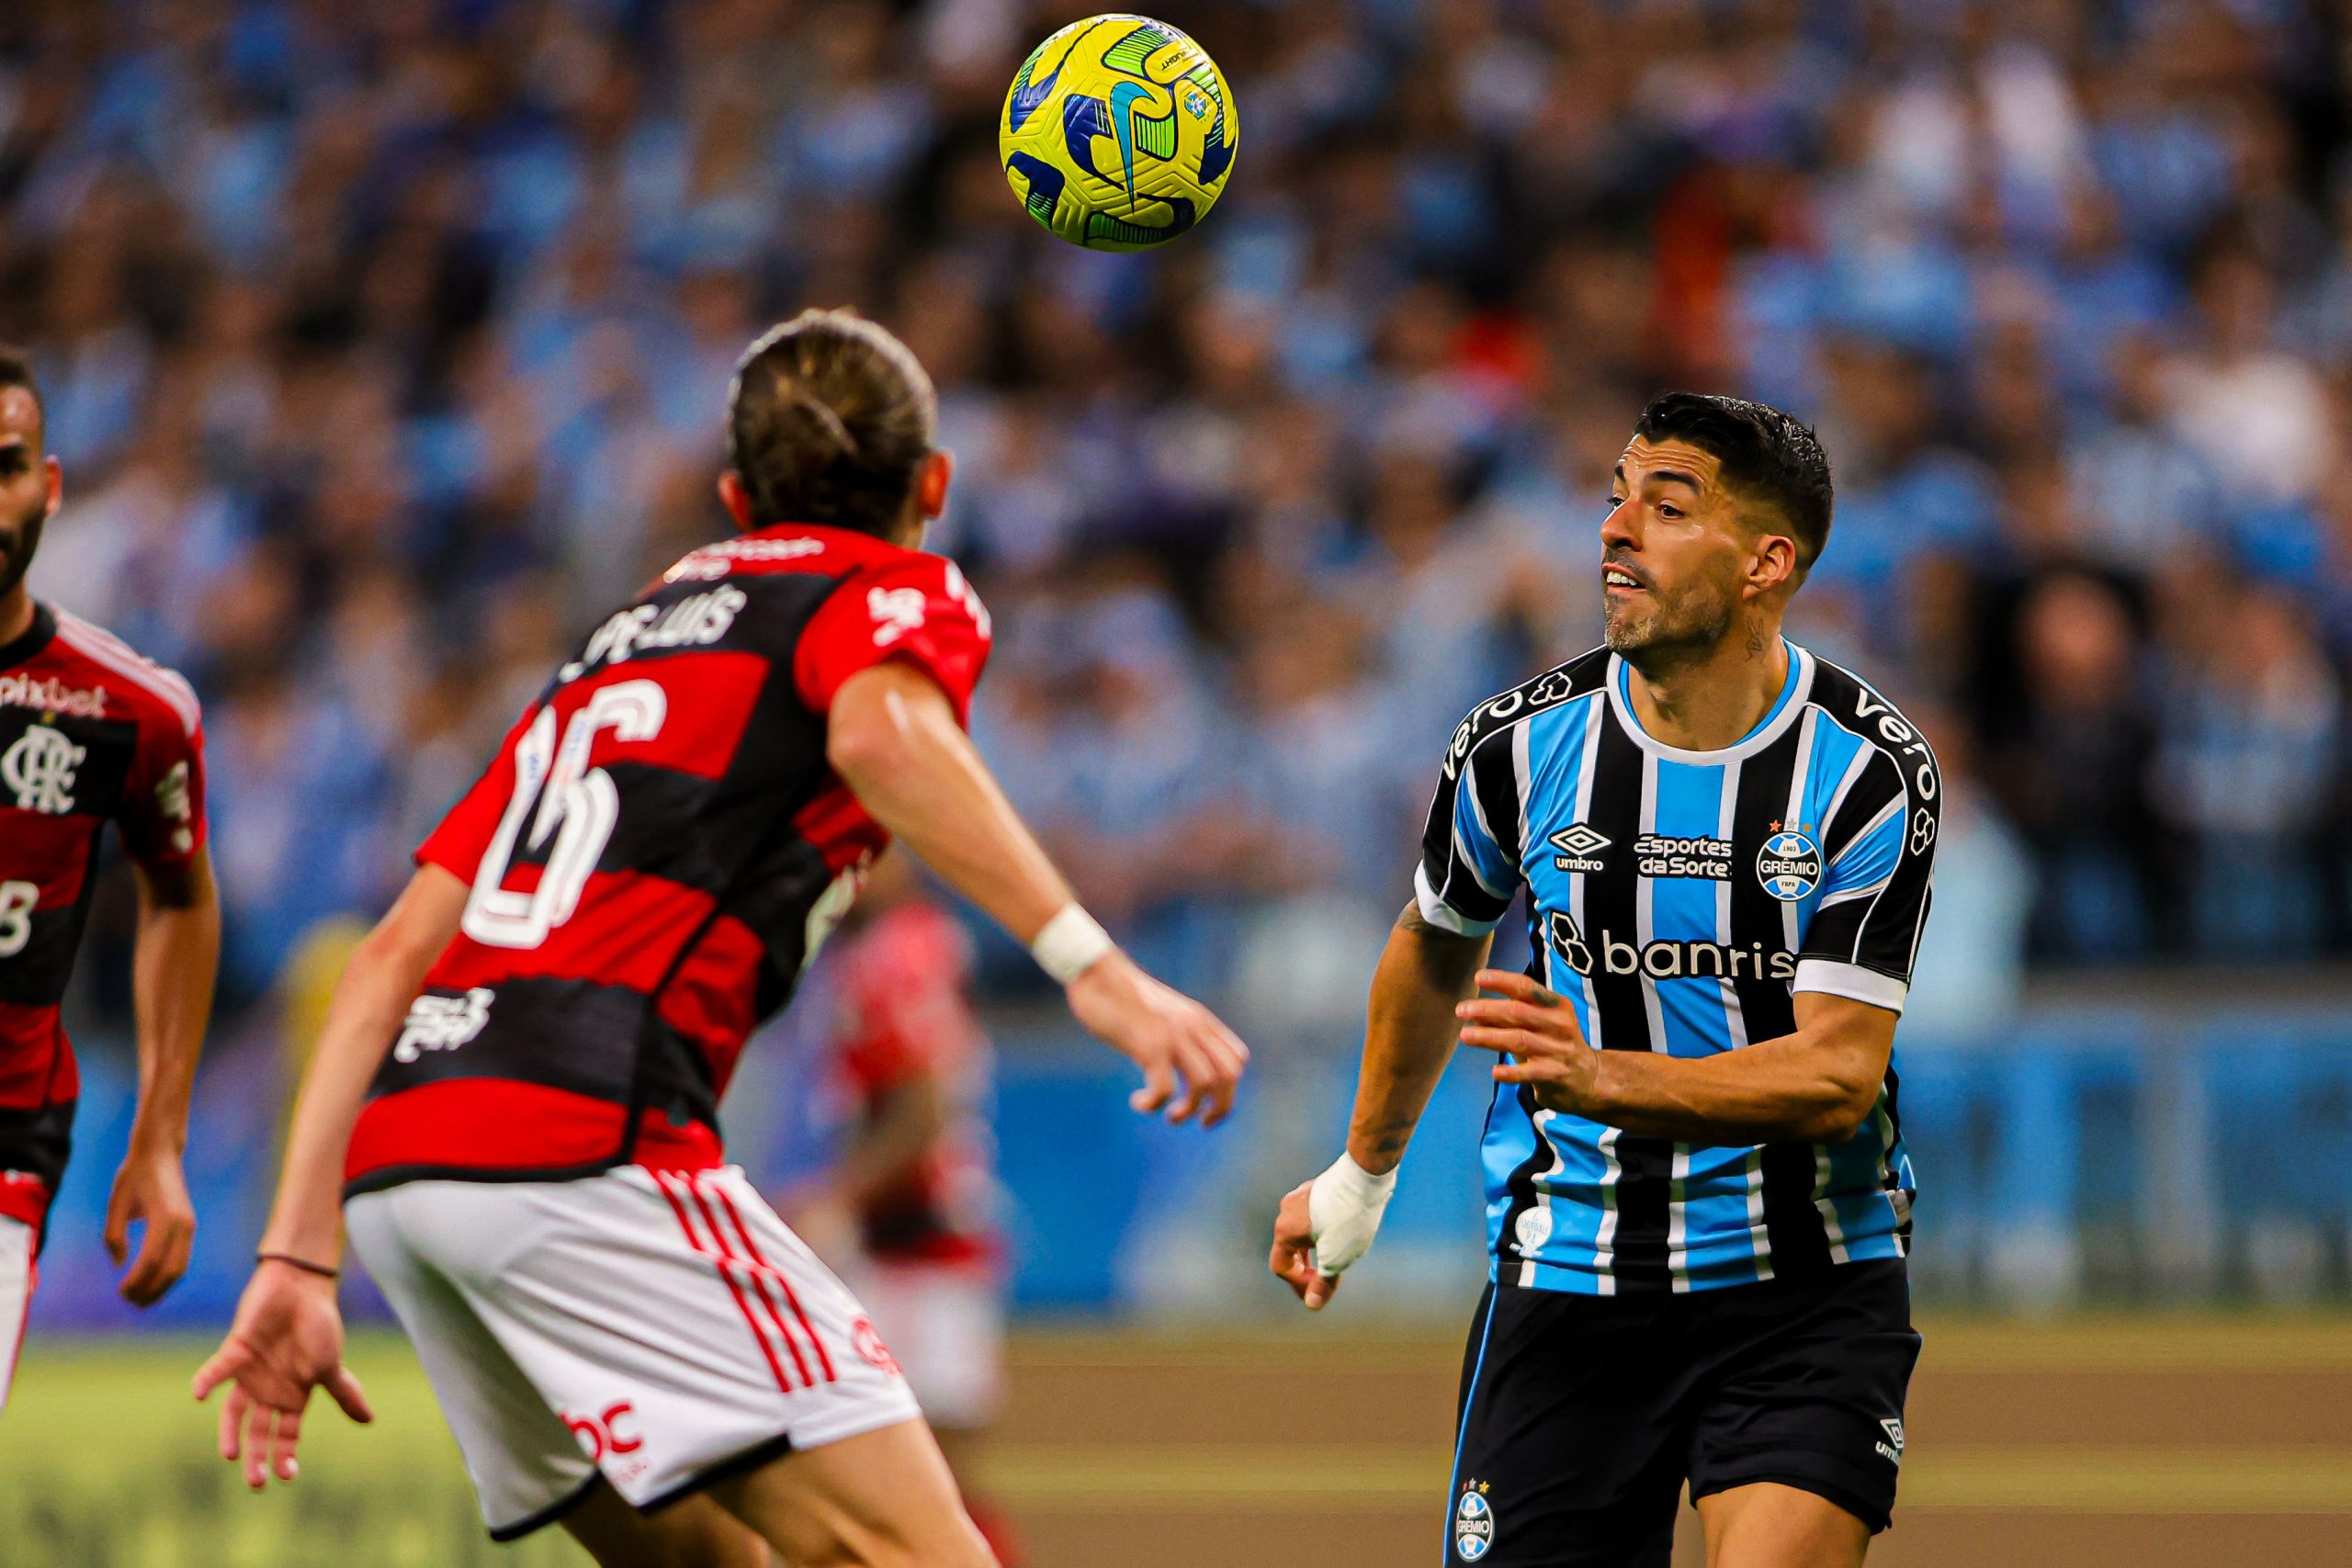 Grêmio x Flamengo - (Foto: SILVIO AVILA/AFP via Getty Images)